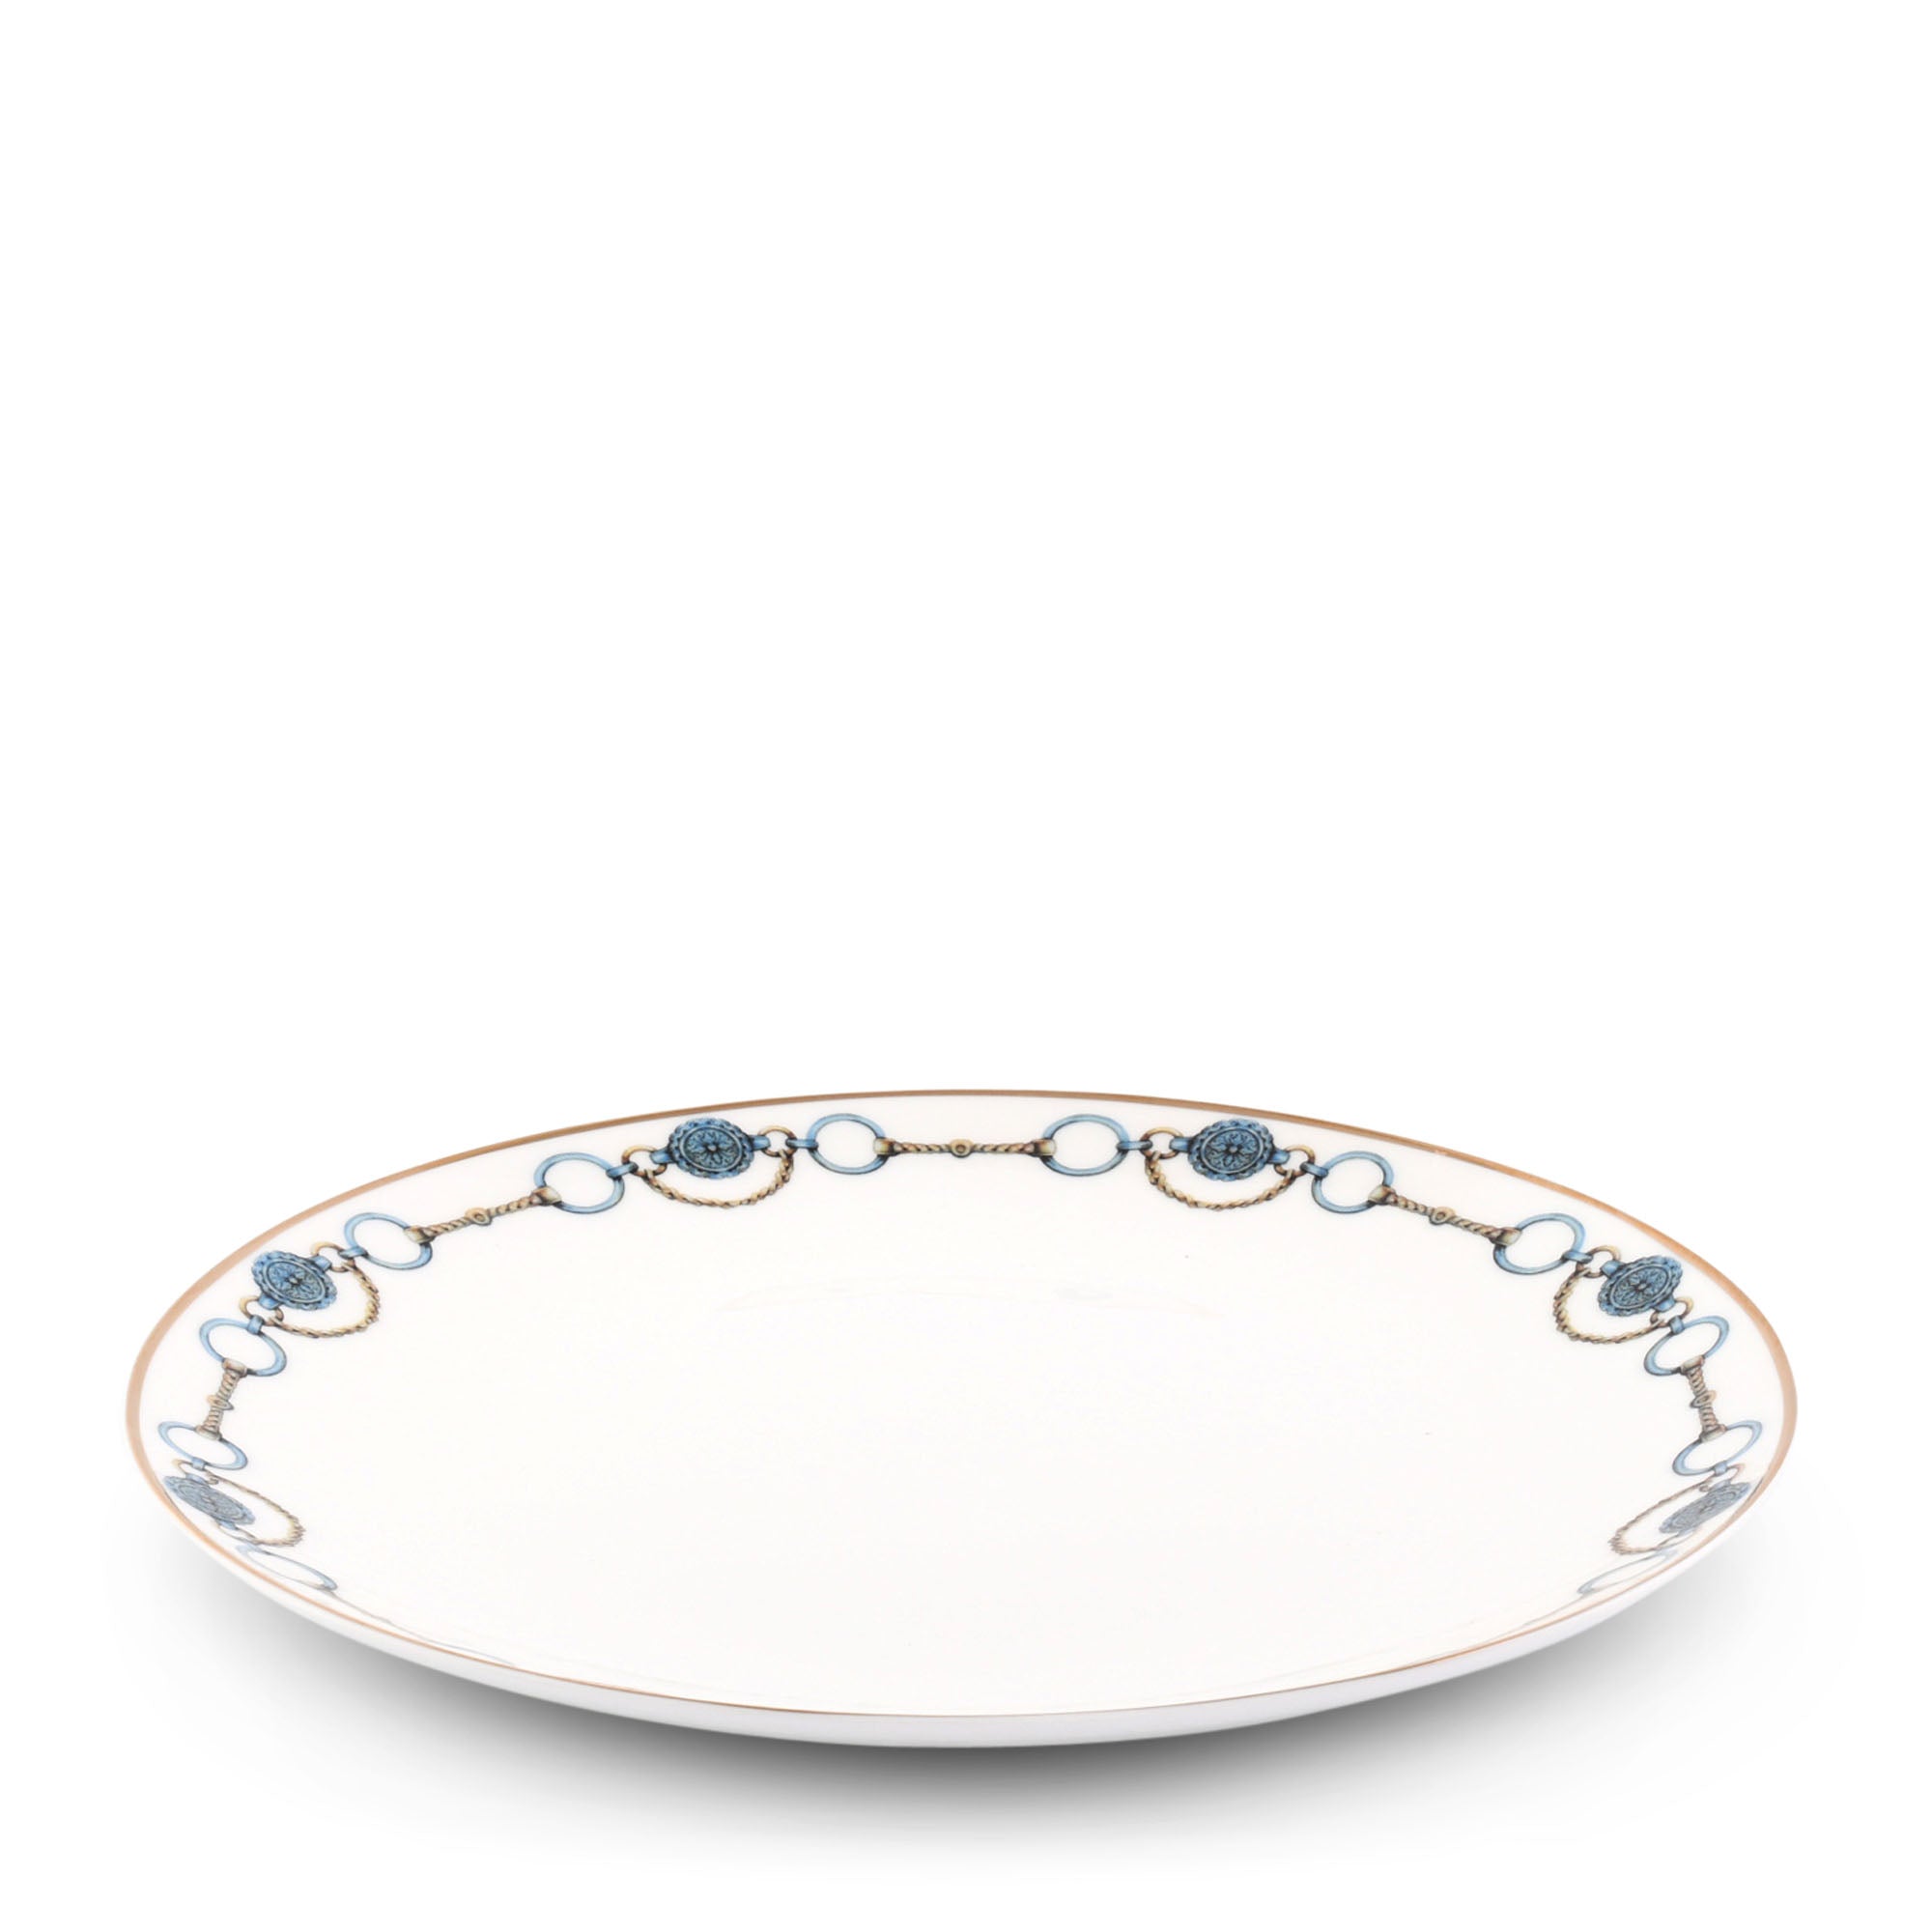 Vagabond House Amarillo Concho Pattern Bone China Round Dinner Plate Product Image